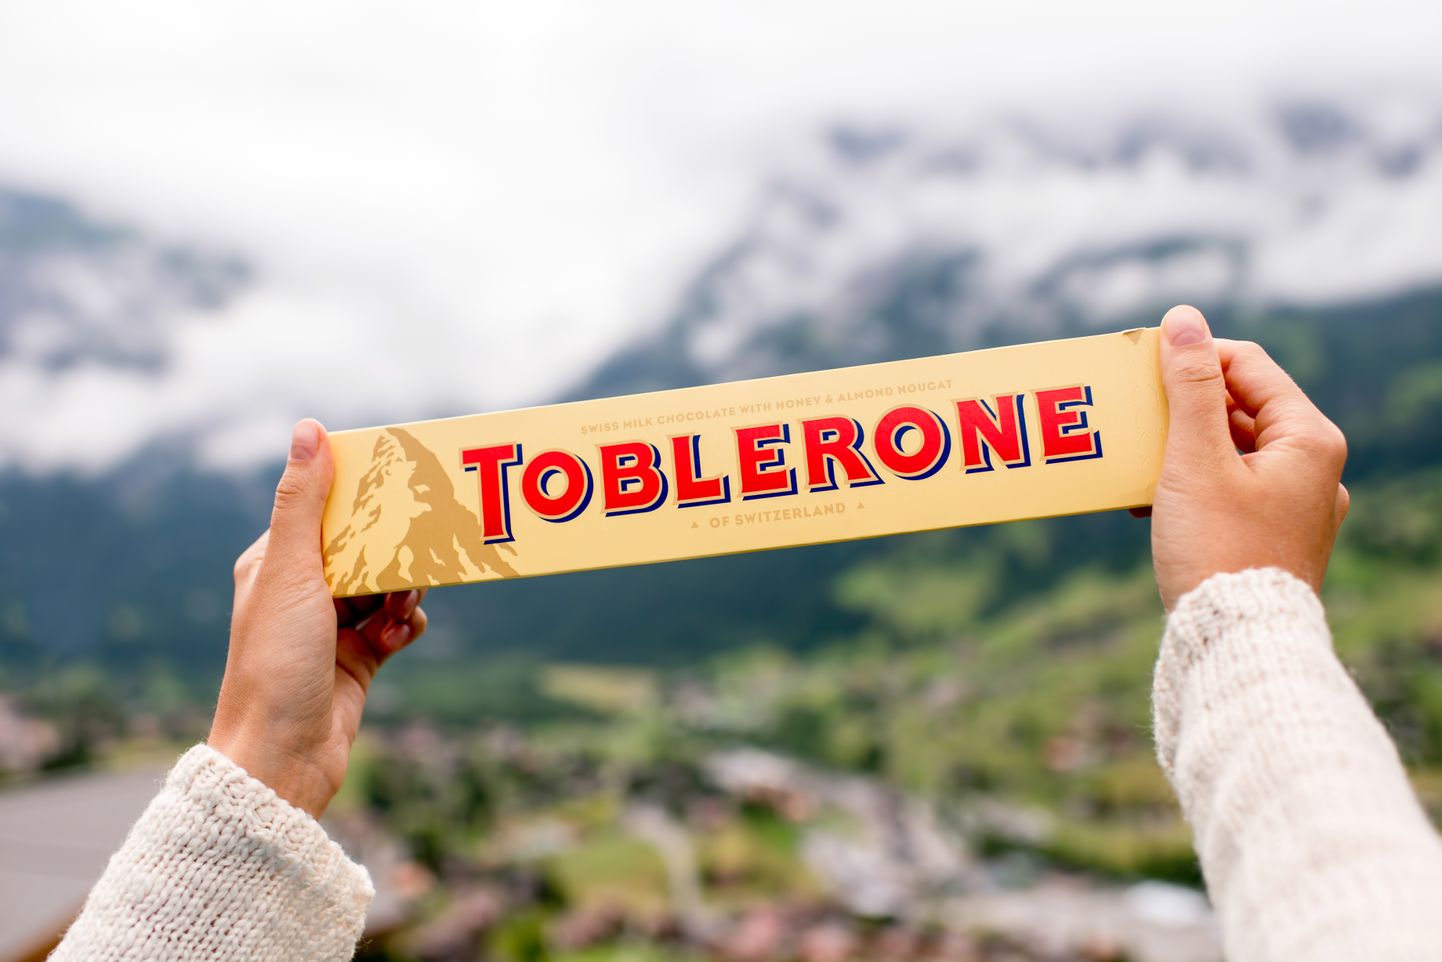 Шоколад Toblerone. Иллюстративное фото